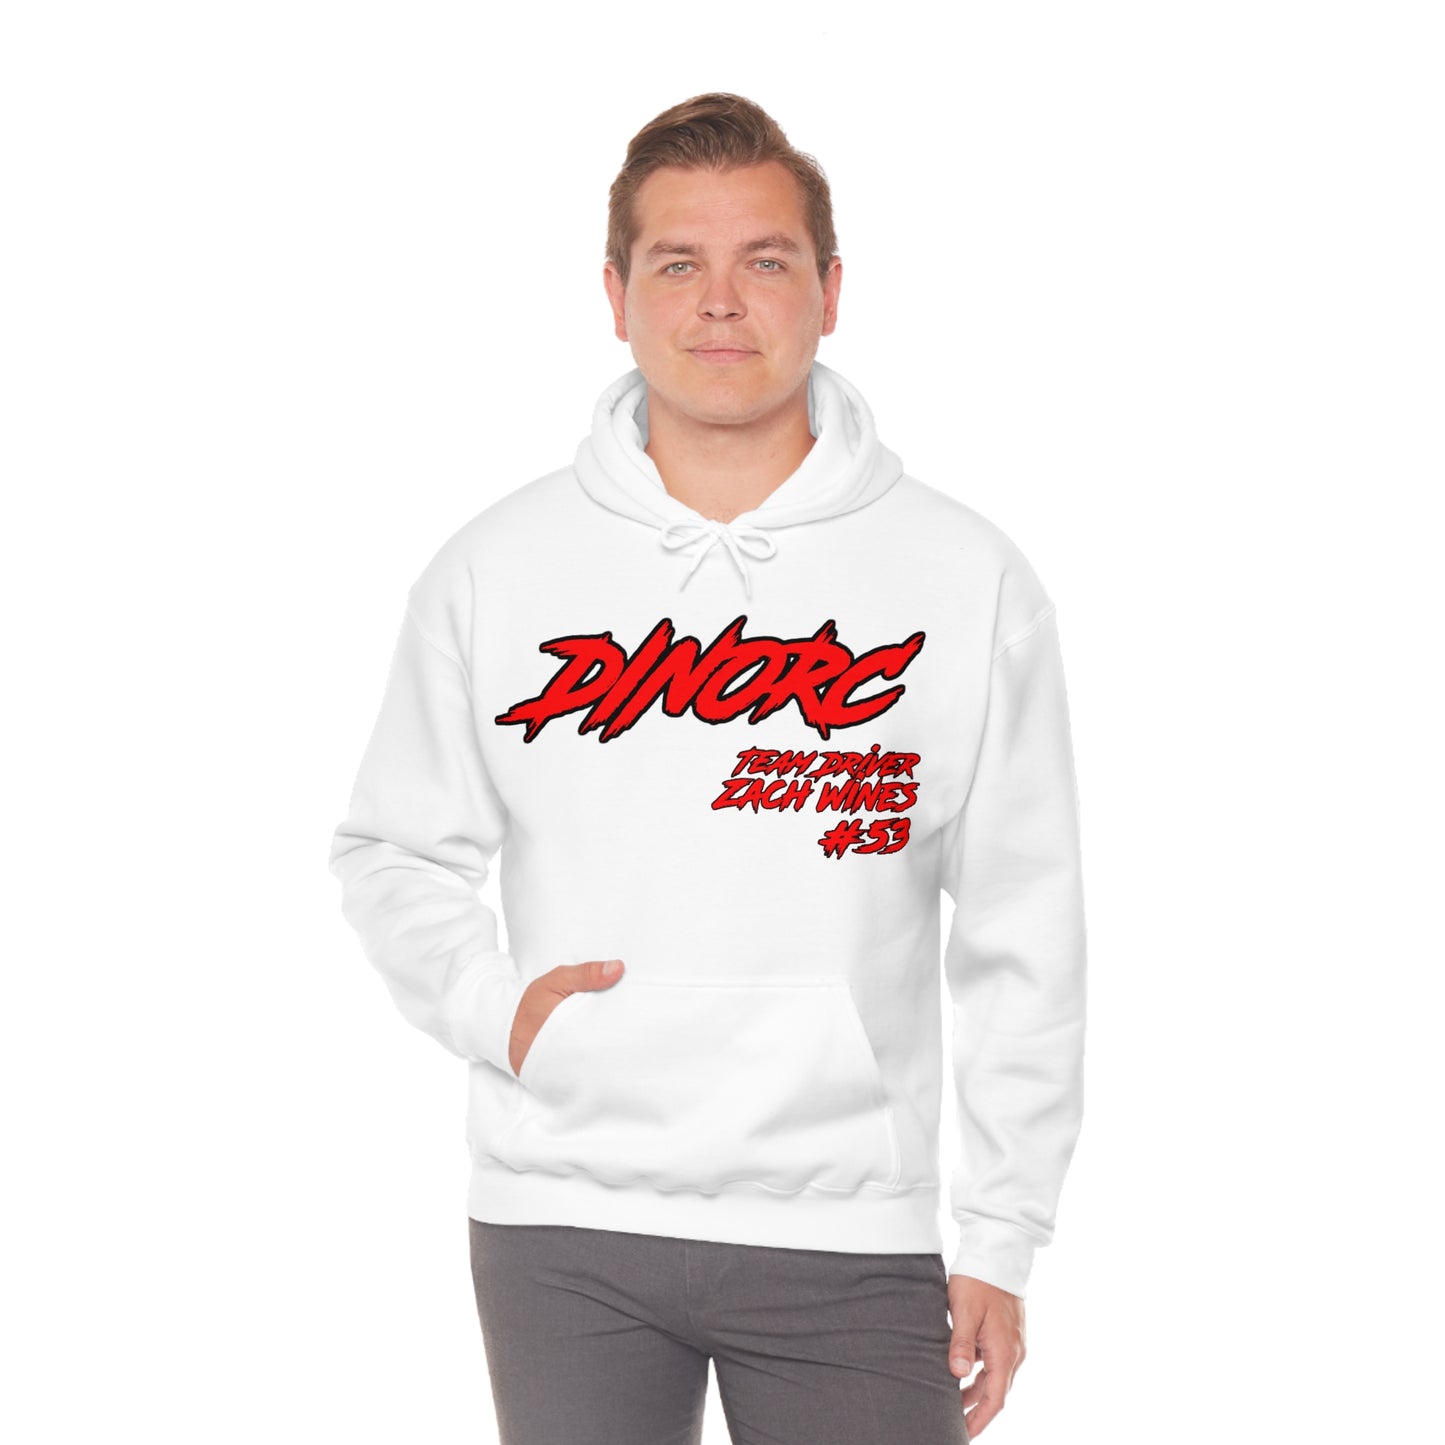 Team Driver Zach Wines DinoRC Logo Hooded Sweatshirt Heavy Blend™ Hooded Sweatshirt